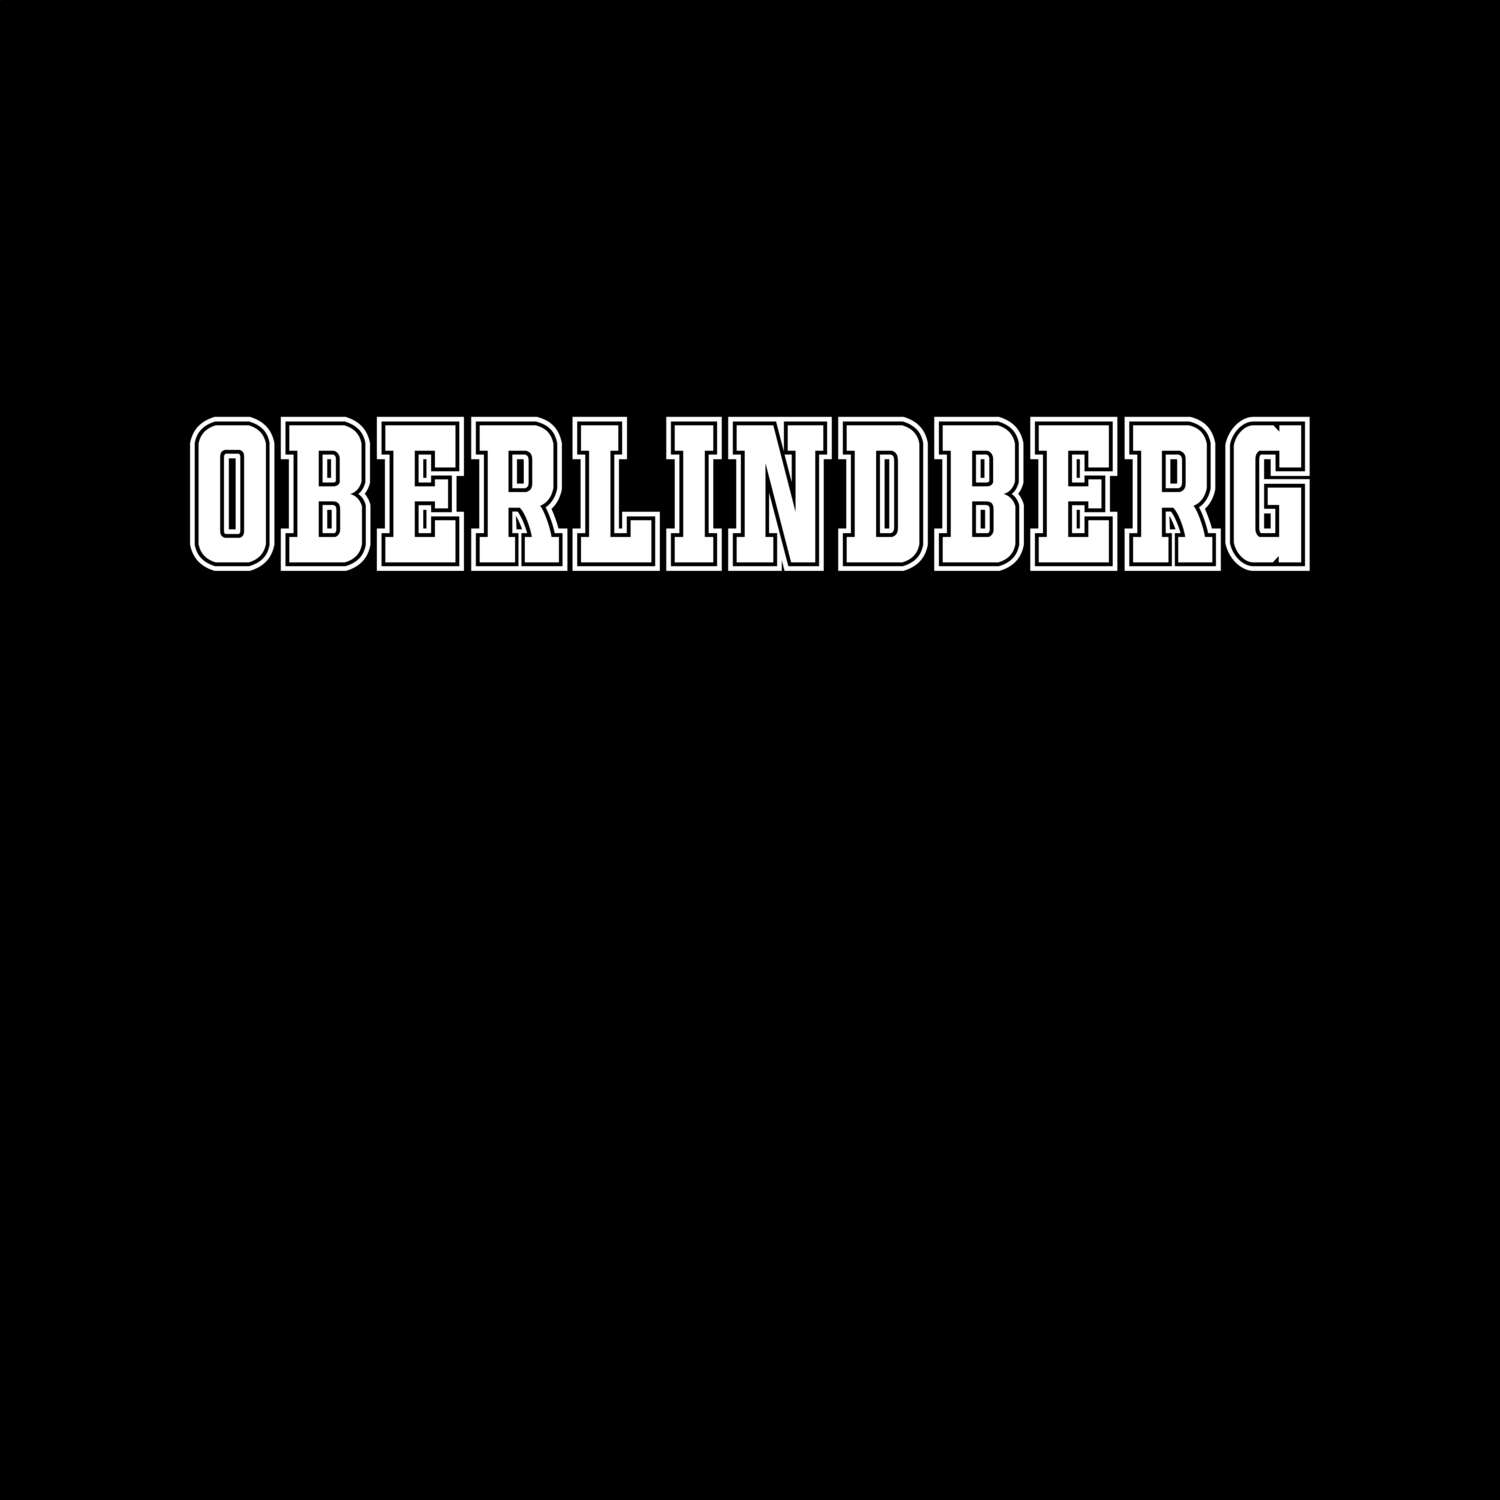 Oberlindberg T-Shirt »Classic«